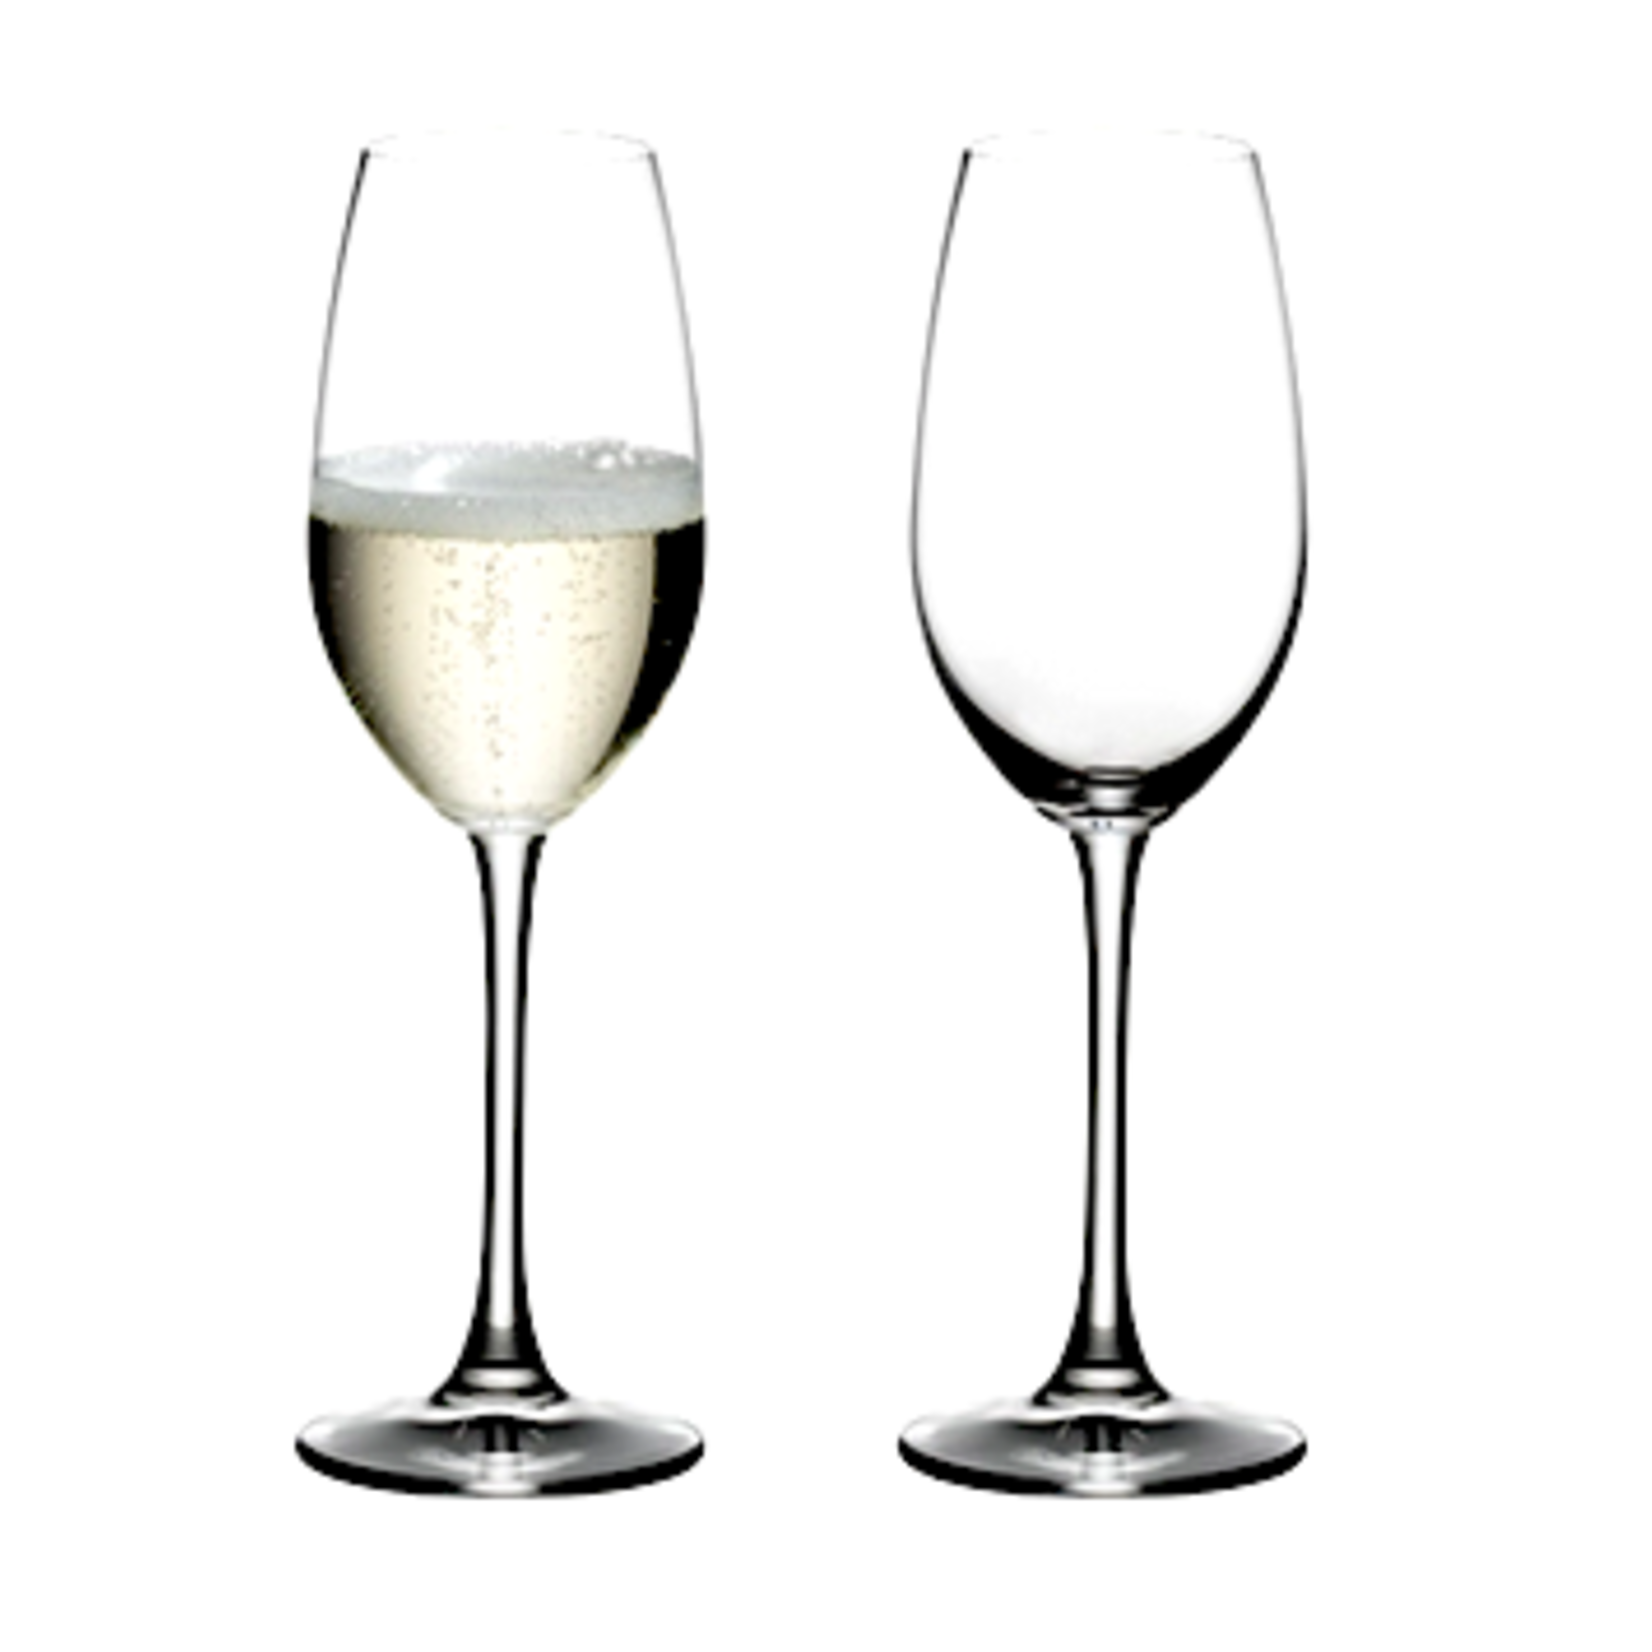 https://cdn.shoplightspeed.com/shops/650516/files/39684900/1652x1652x2/riedel-riedel-ouverture-champagne-glasses-sold-in.jpg